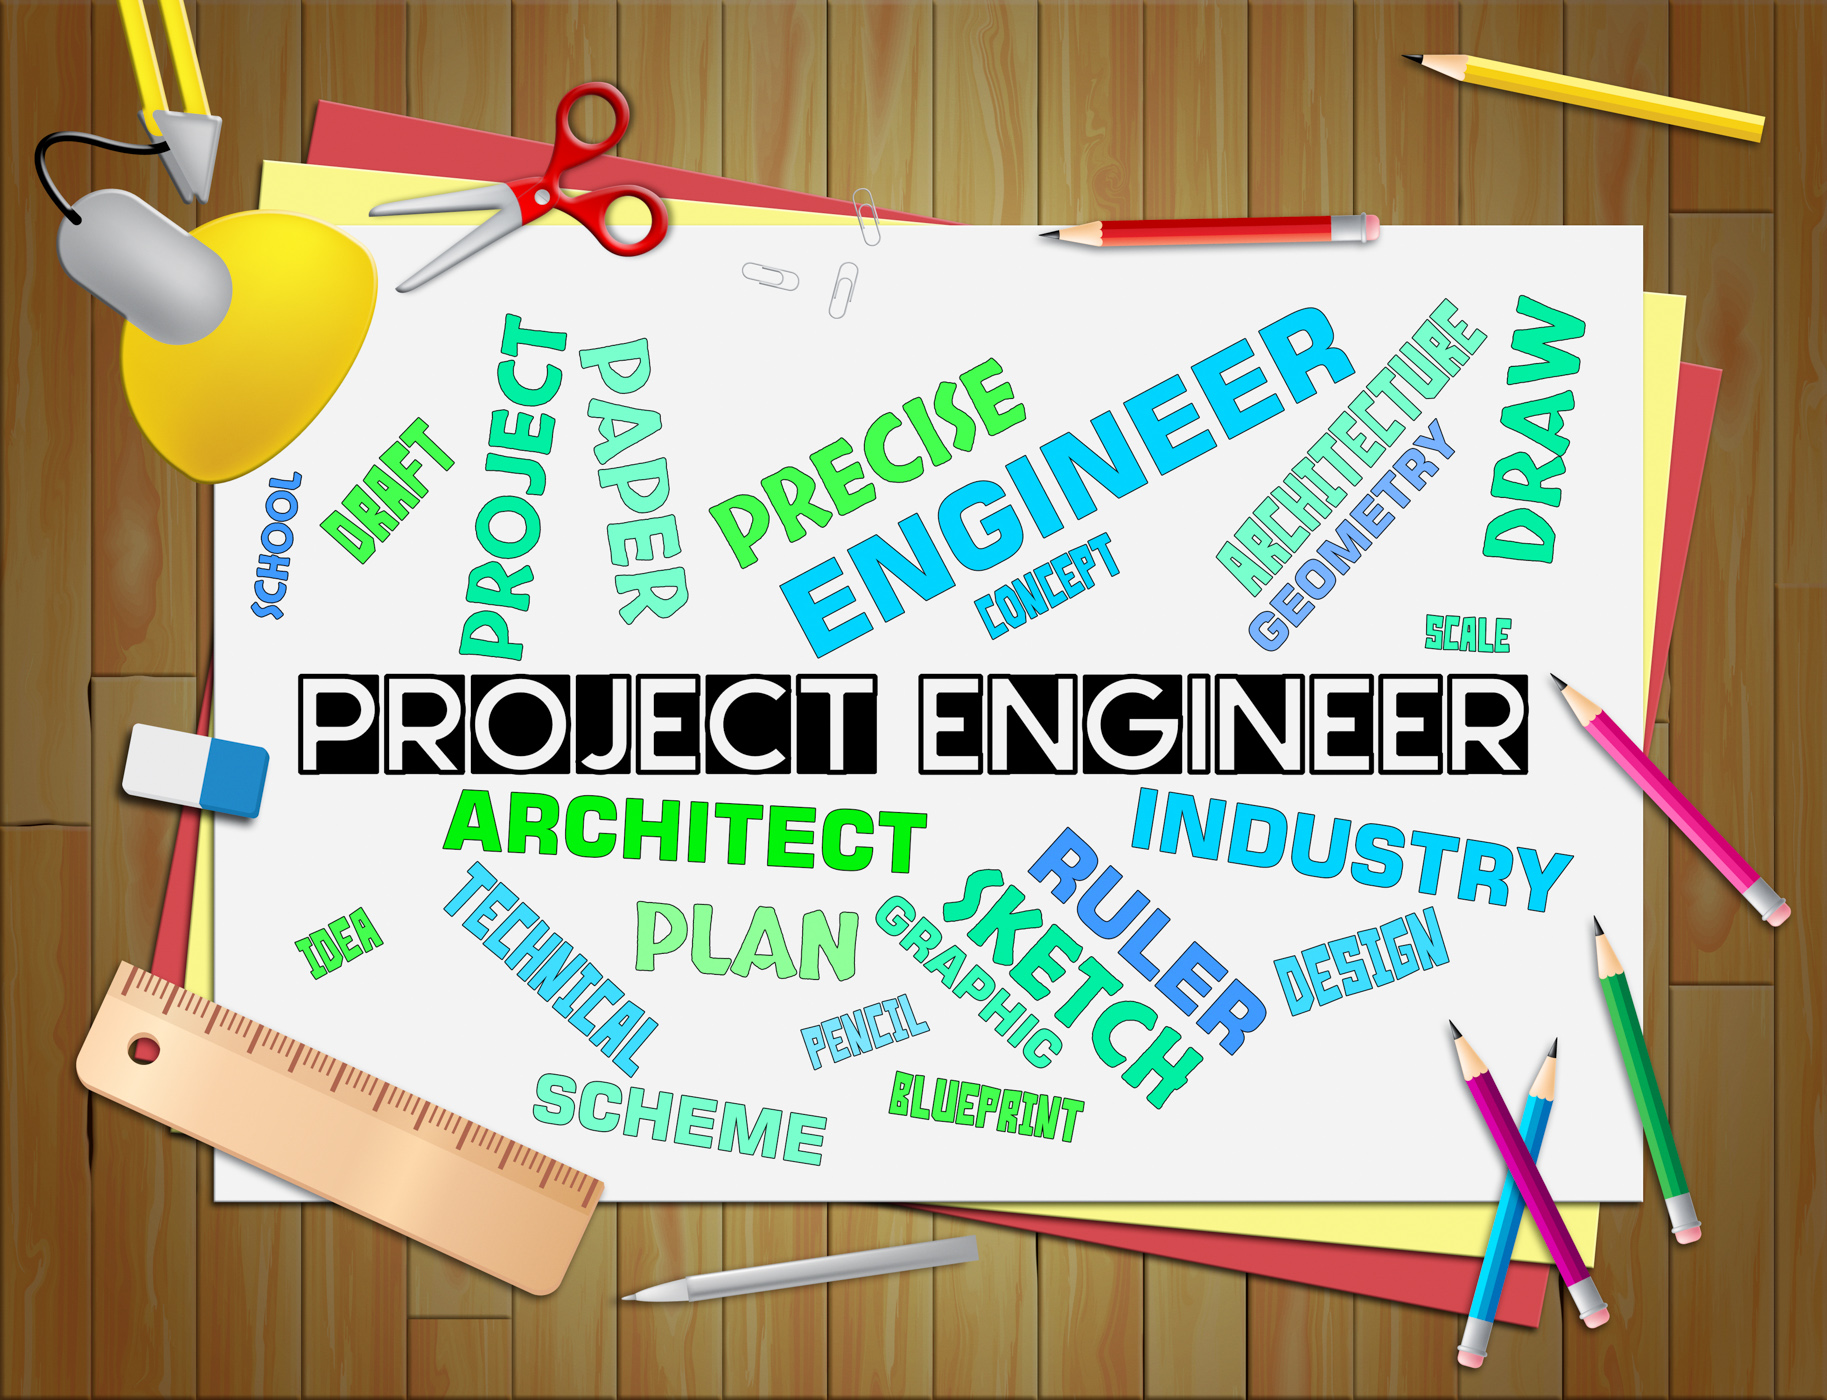 Project engineering indicates mechanics career and plan photo